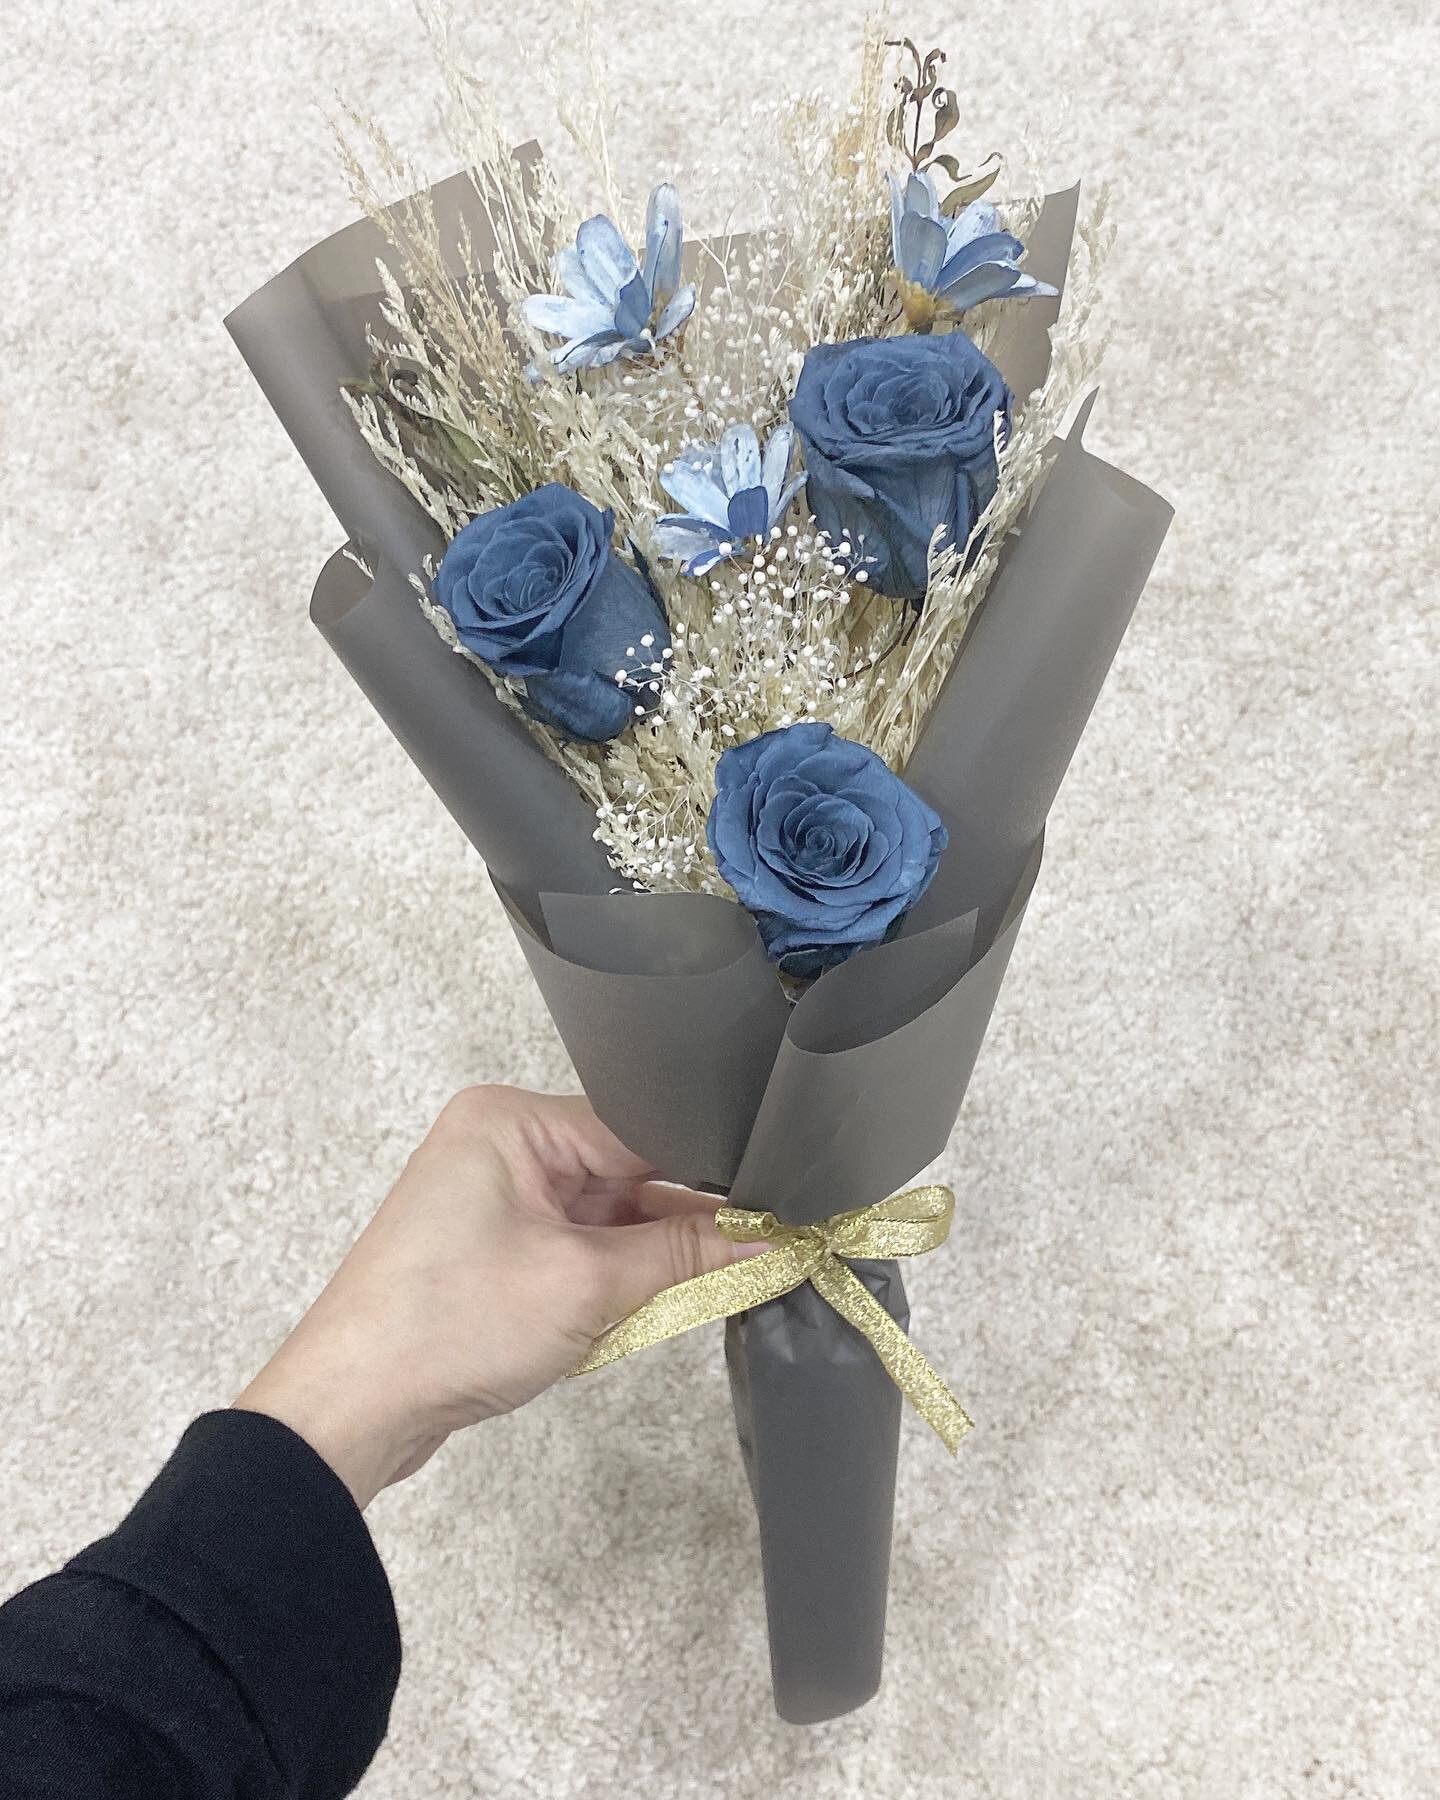 Customised blue preserved roses bouquet 💙 Shop now at www.moodfleur.com 

#moodfleur #sgflorist #preservedroses